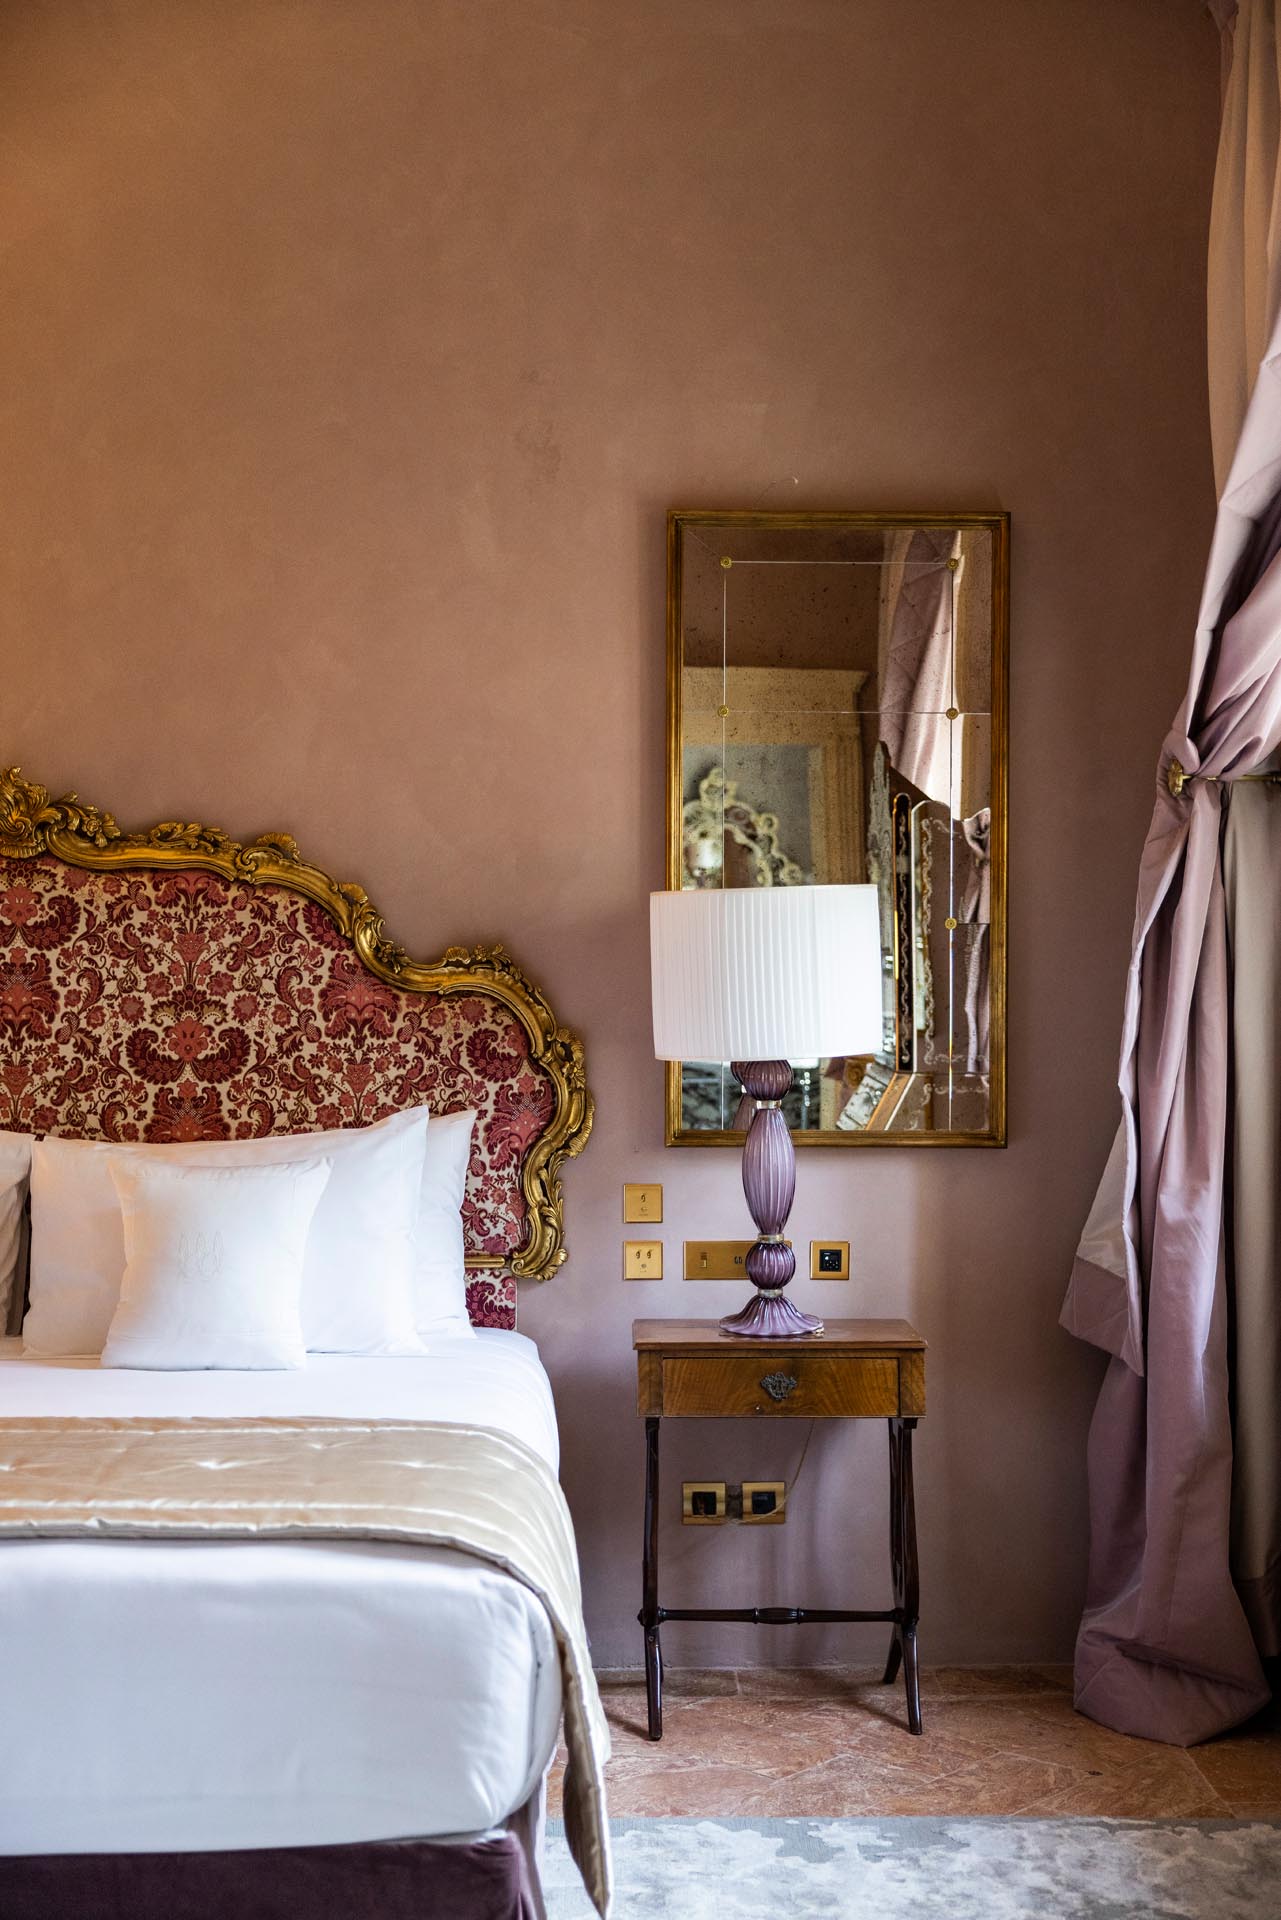 02 Room In The Villa Bedroom Enrico Costantini